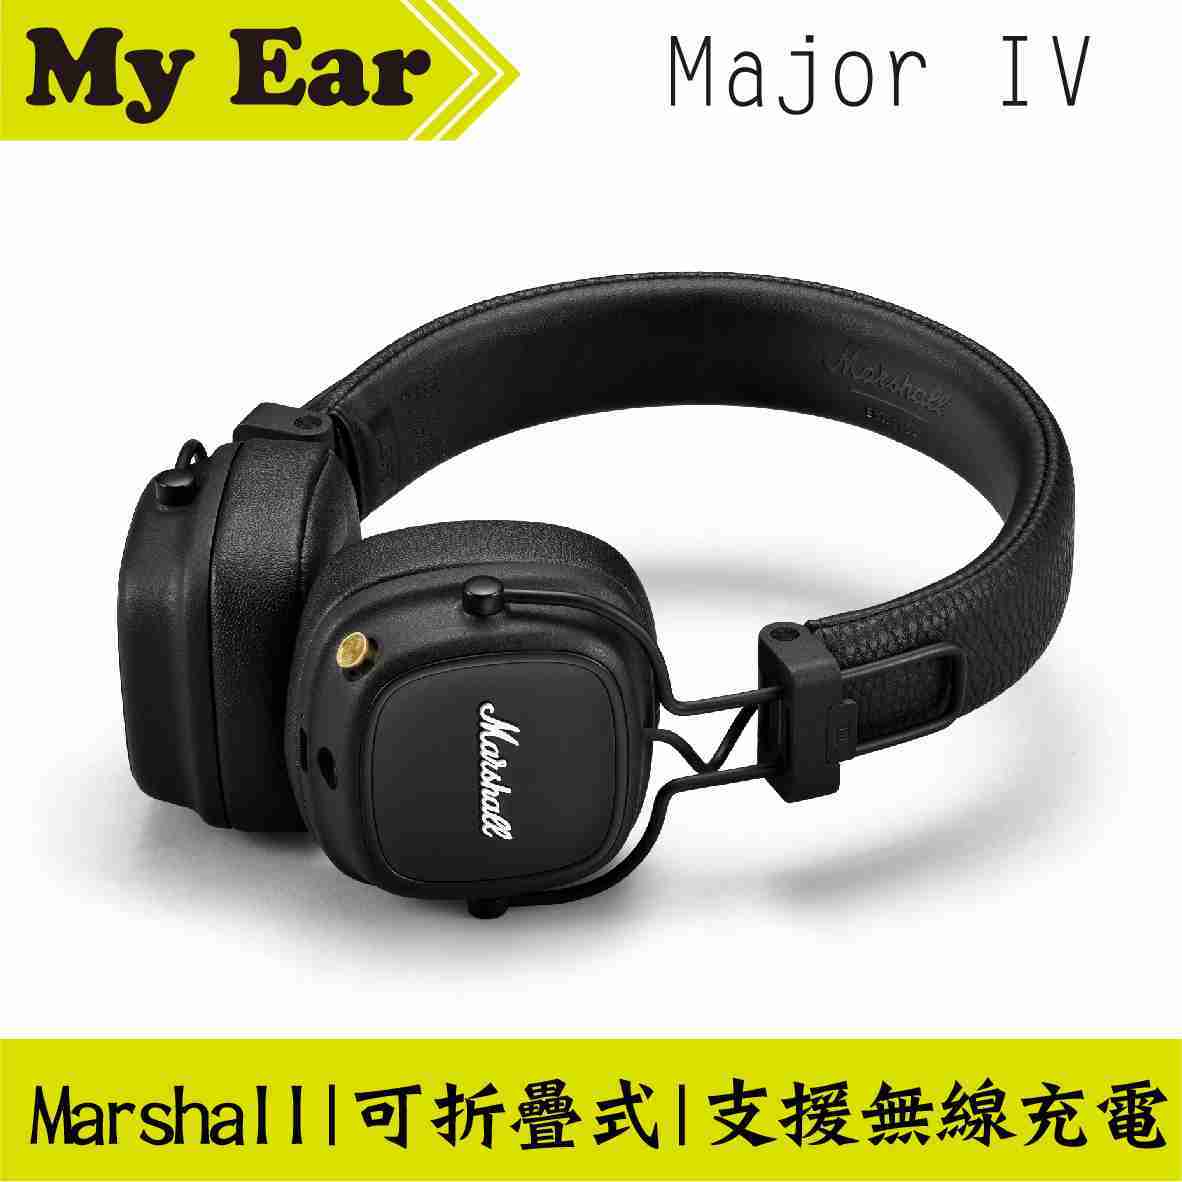 Marshall Major IV 藍芽 耳罩式耳機 | My Ear 耳機專門店